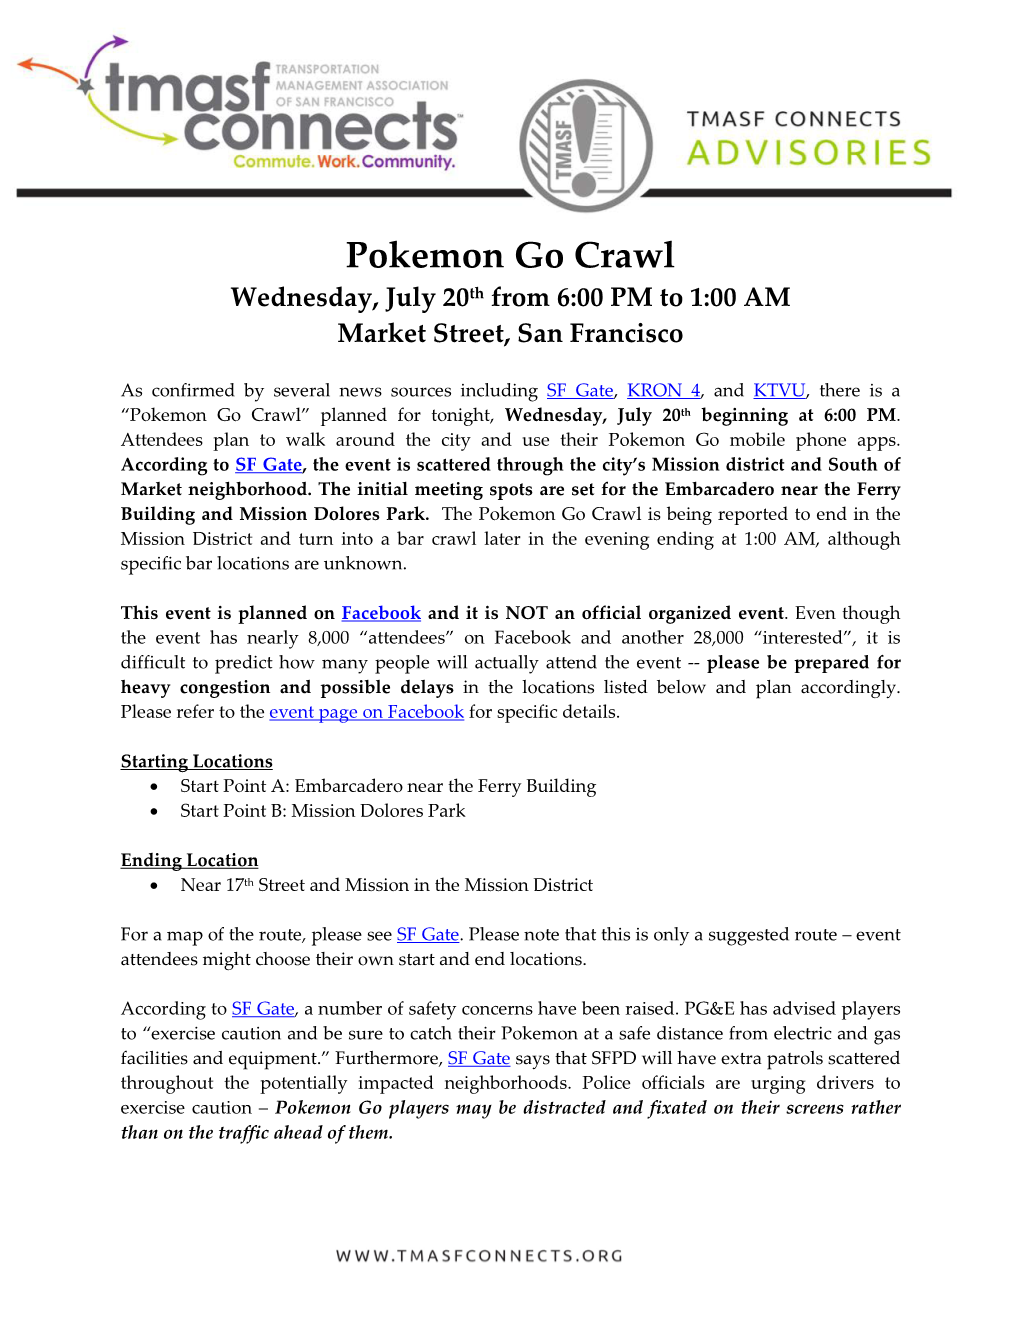 Pokemon Go Crawl Wednesday, July 20Th from 6:00 PM to 1:00 AM Market Street, San Francisco